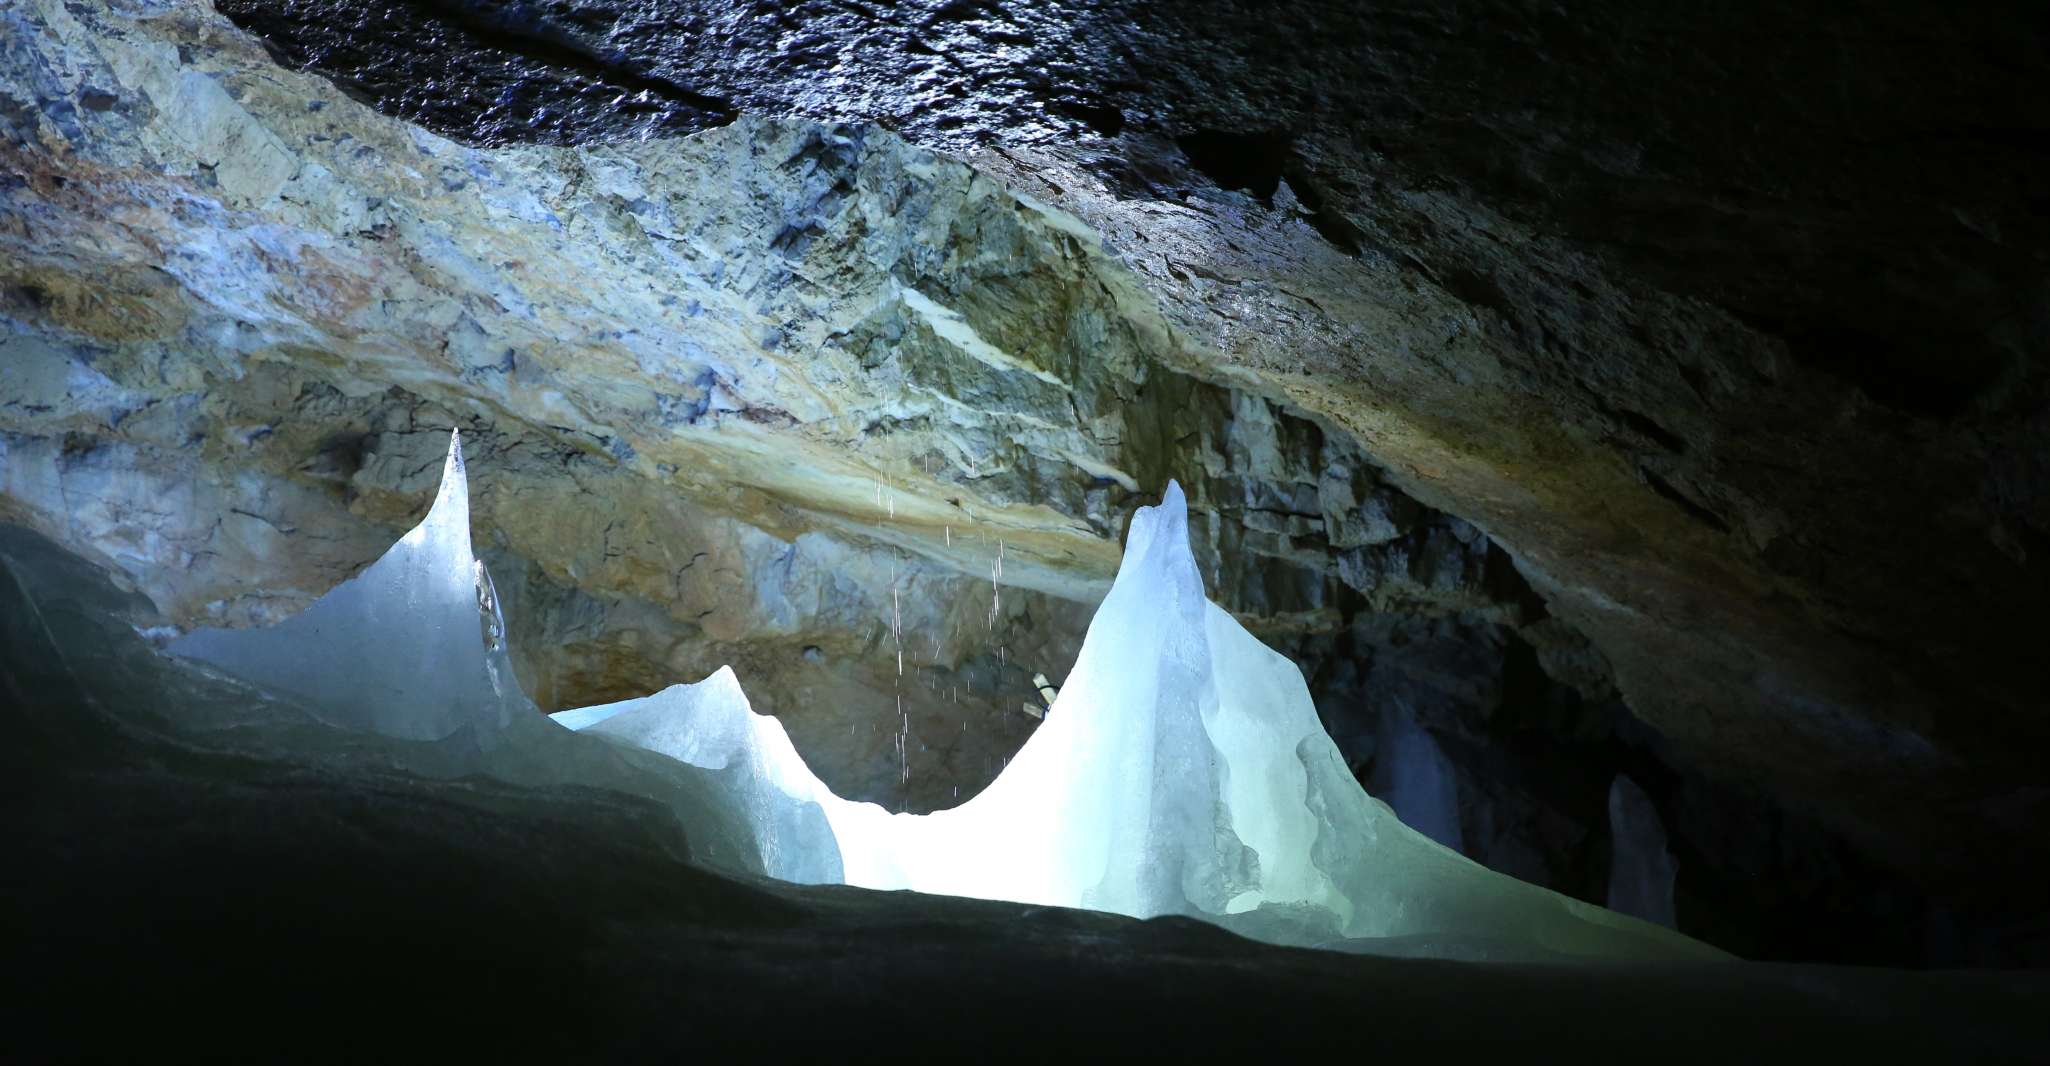 Werfen Ice Caves & Hohenwerfen Castle Private Tour - Housity